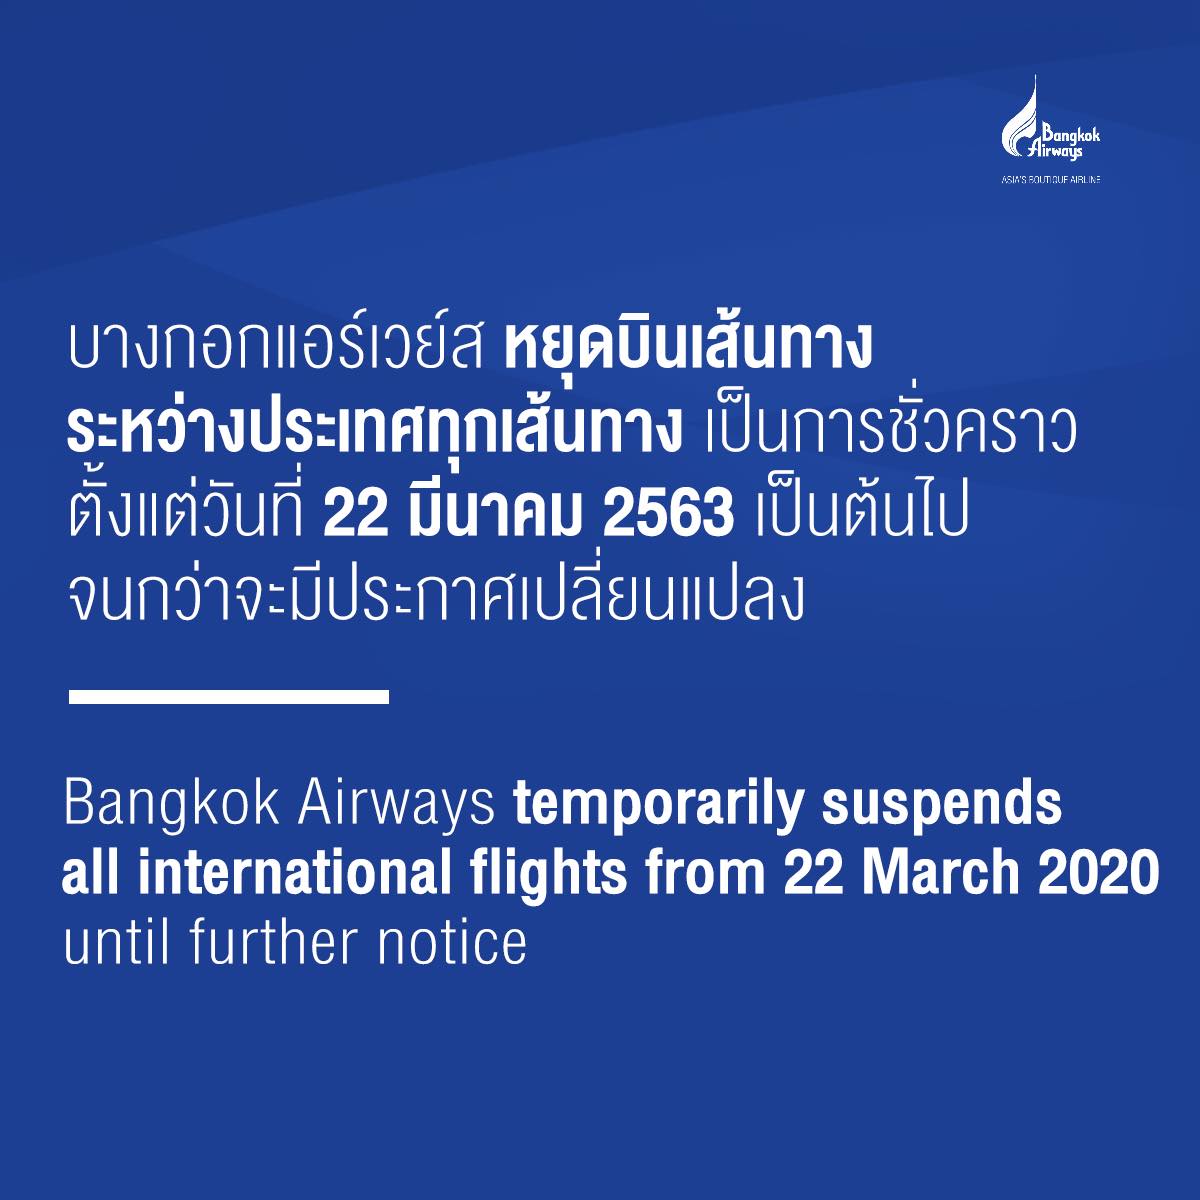 Bangkok Airways cancel